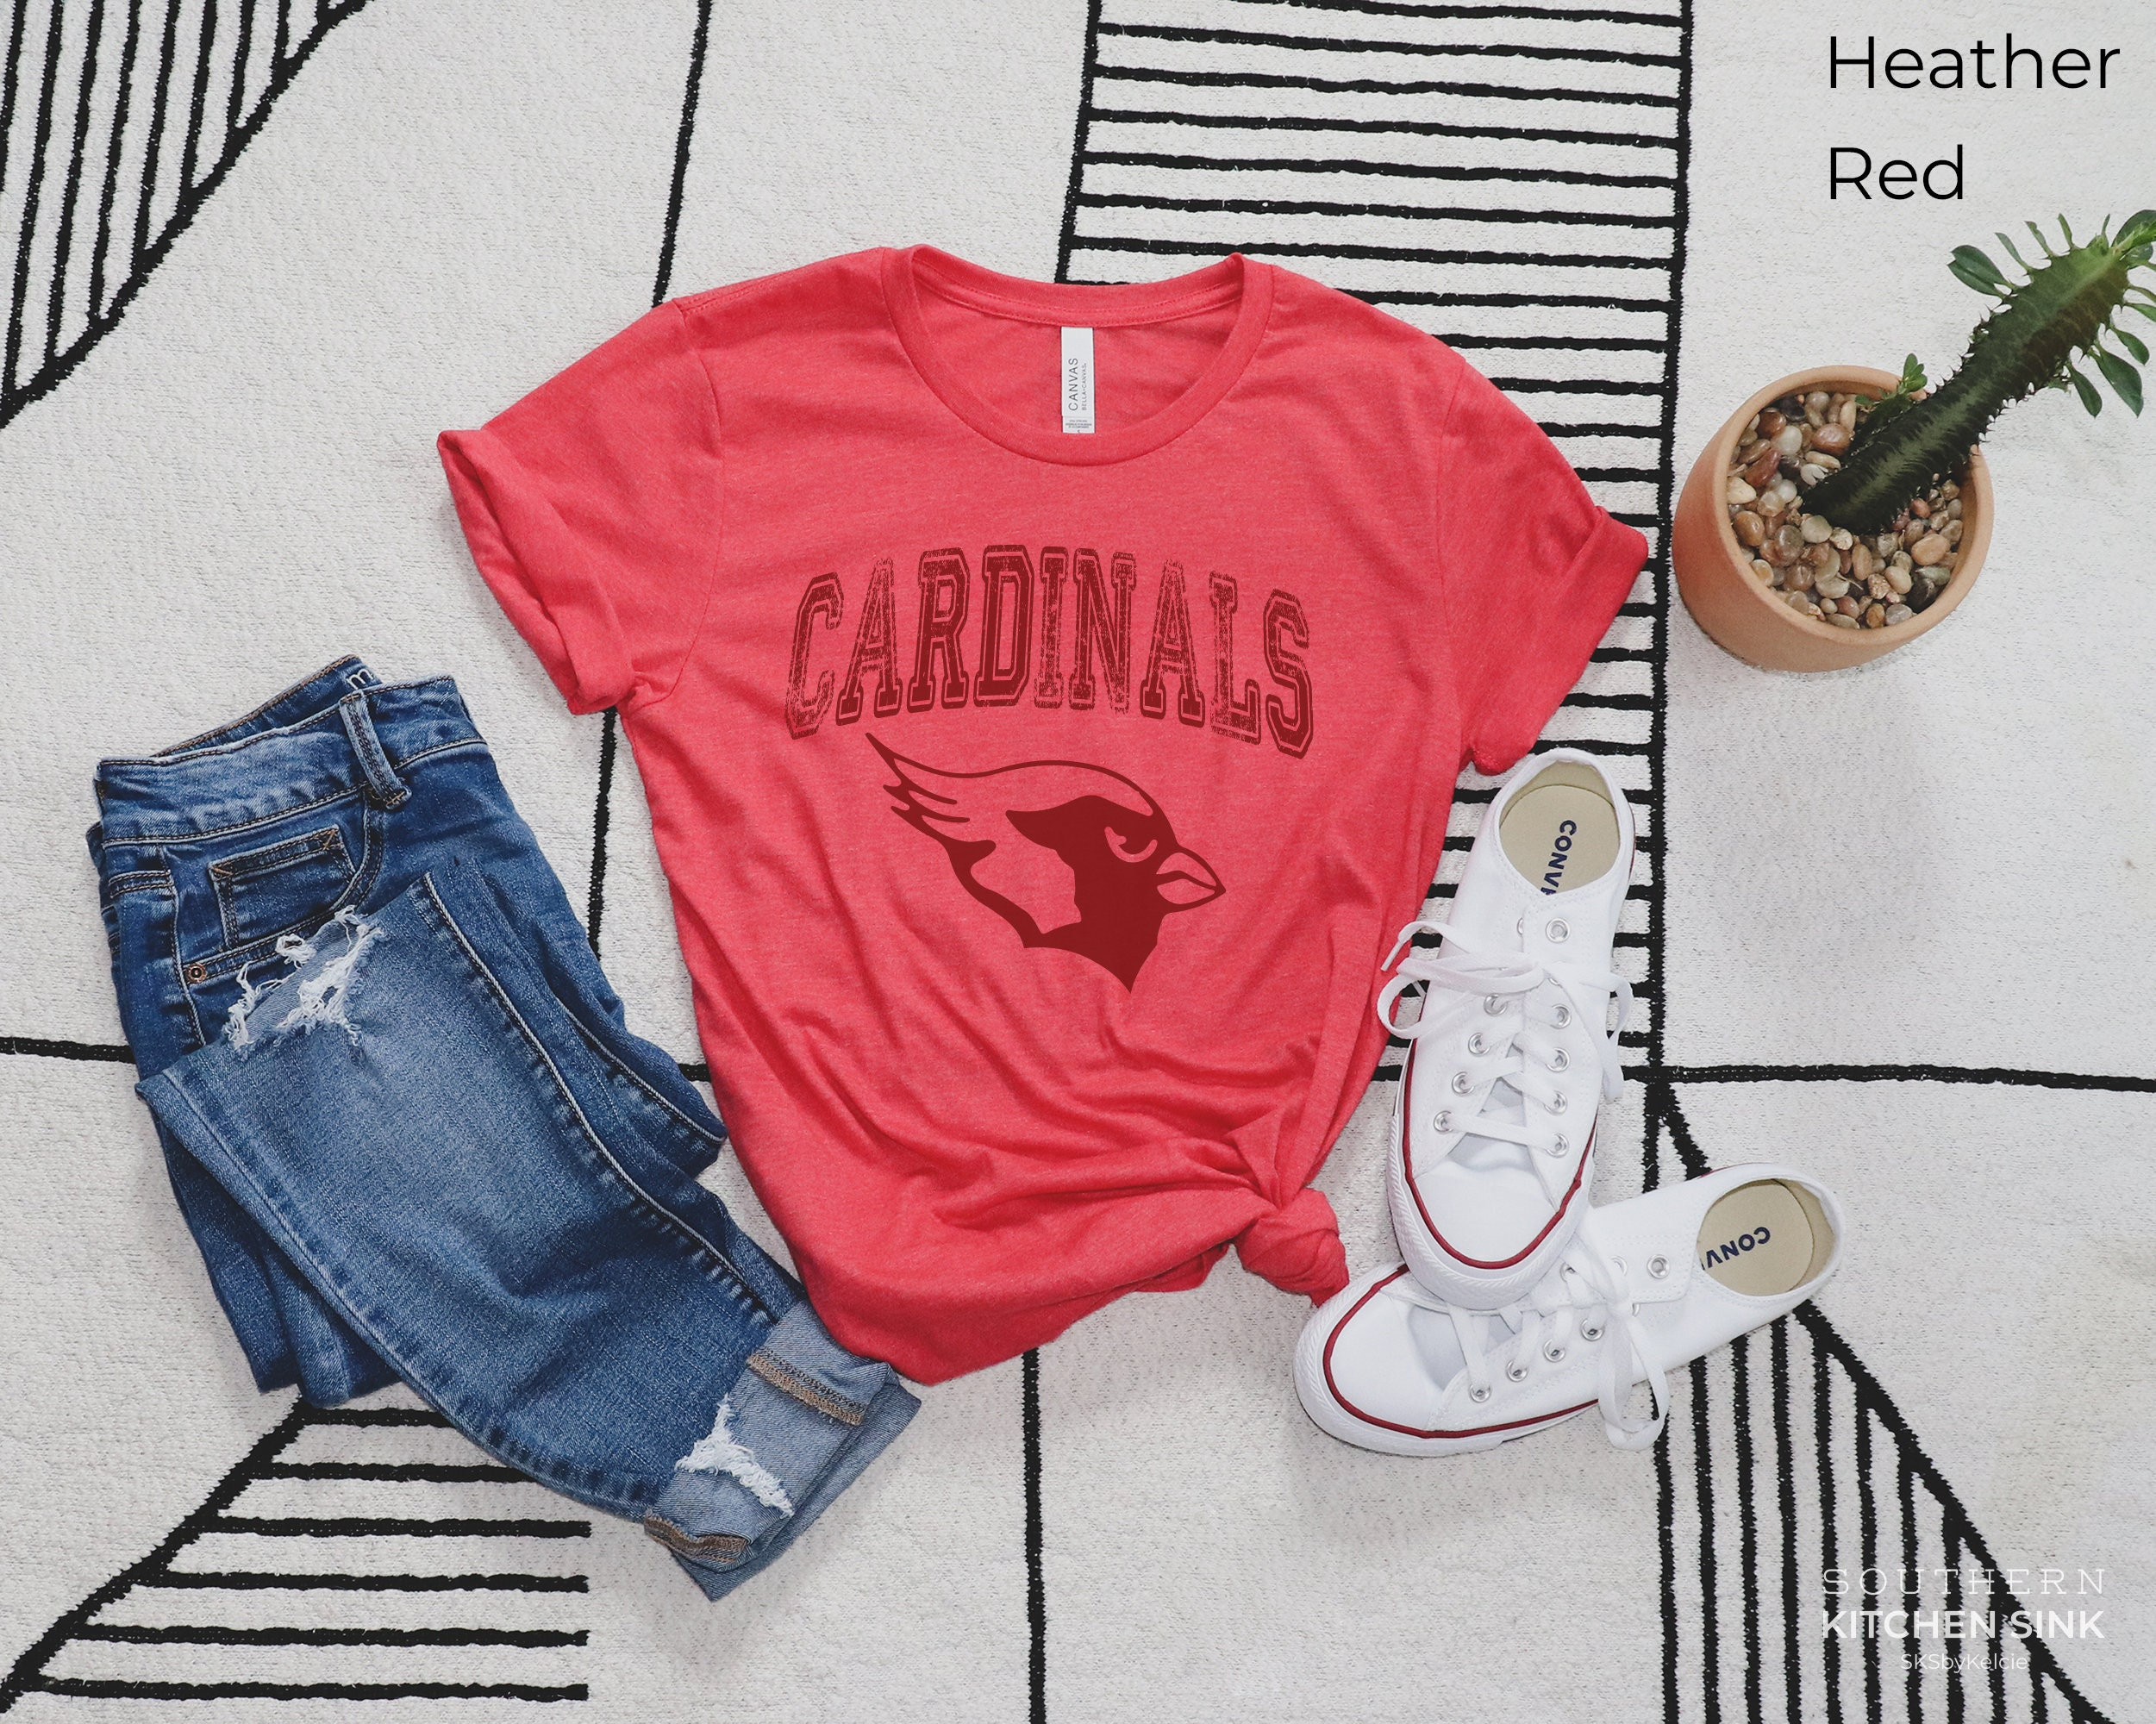 Vintage St Louis Cardinals T Shirt Tee MLB Baseball M… - Gem